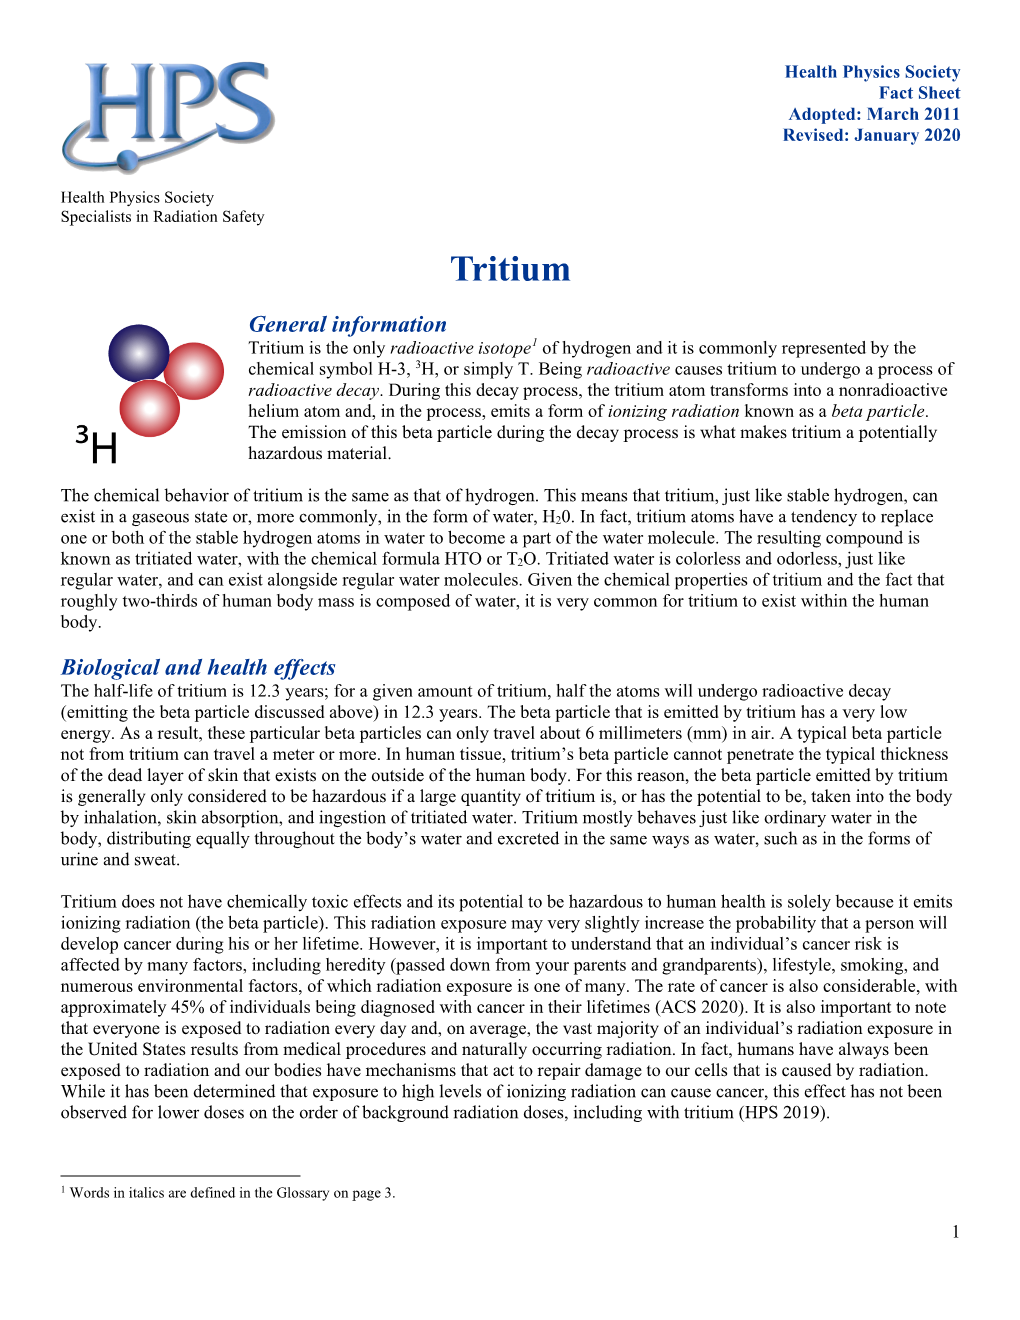 Tritium Fact Sheet